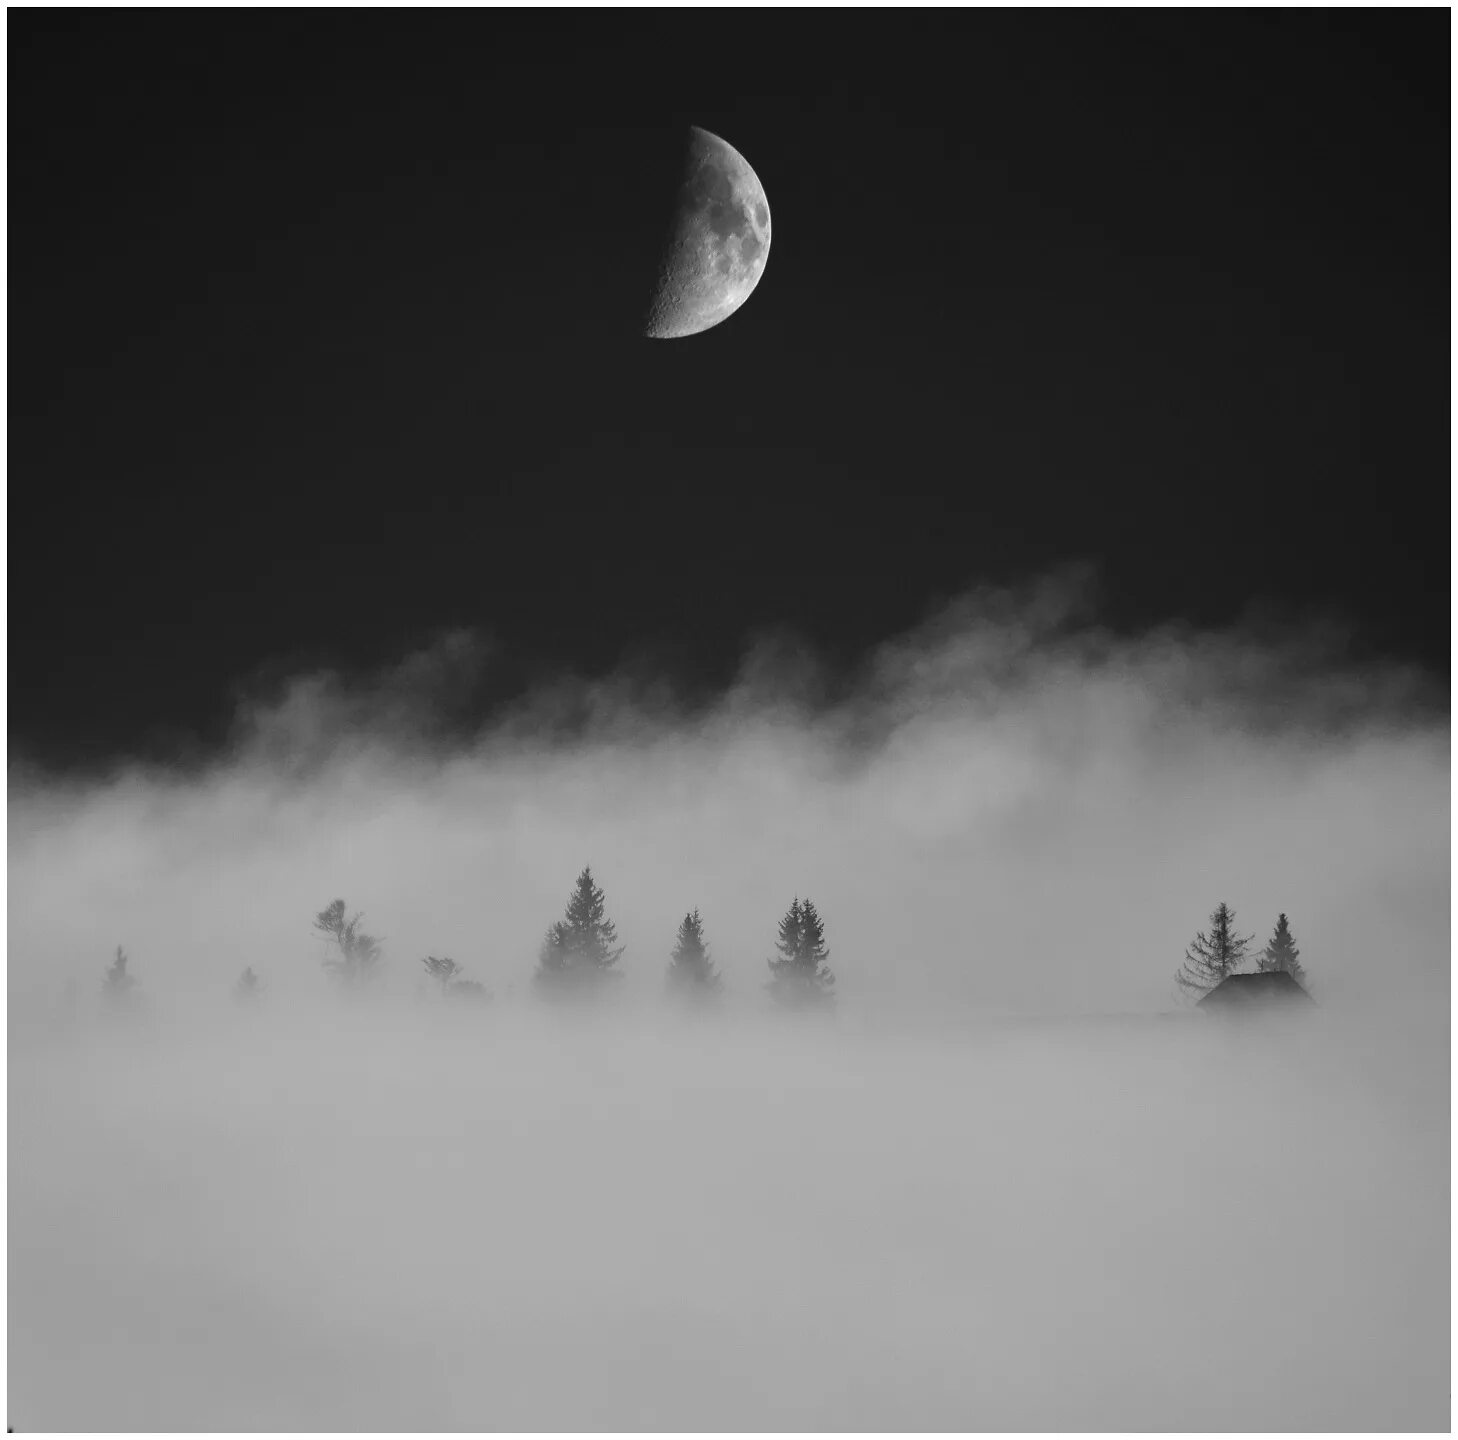 Страх да туман. Туман надвигается мы обречены. Наползающий туман референс. Луна во мгле перебегала.